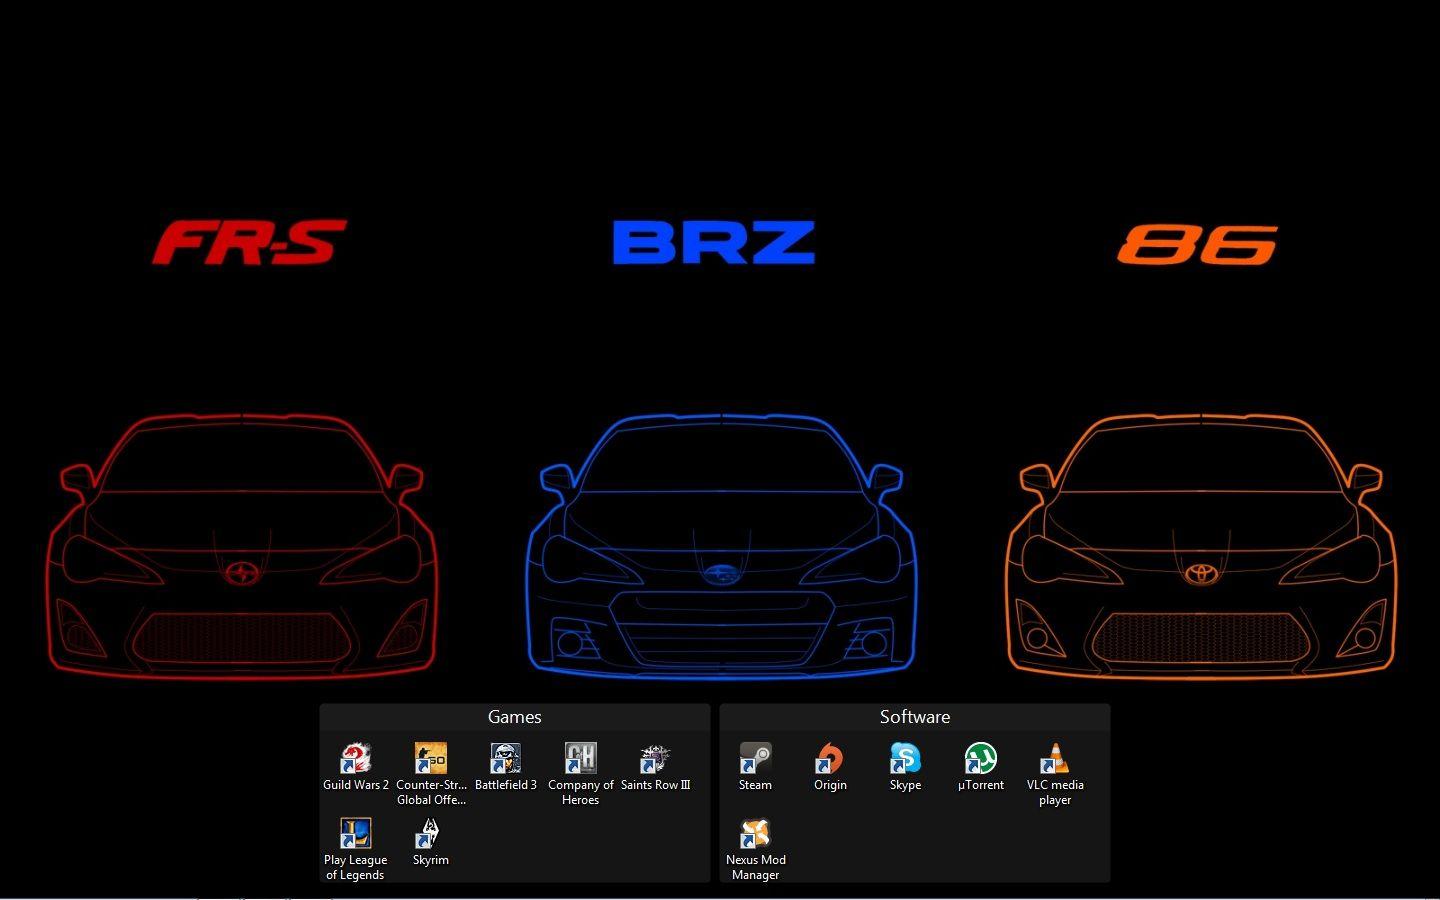 Neat Outline Drawings BRZ 86 FR S Forum. Subaru BRZ